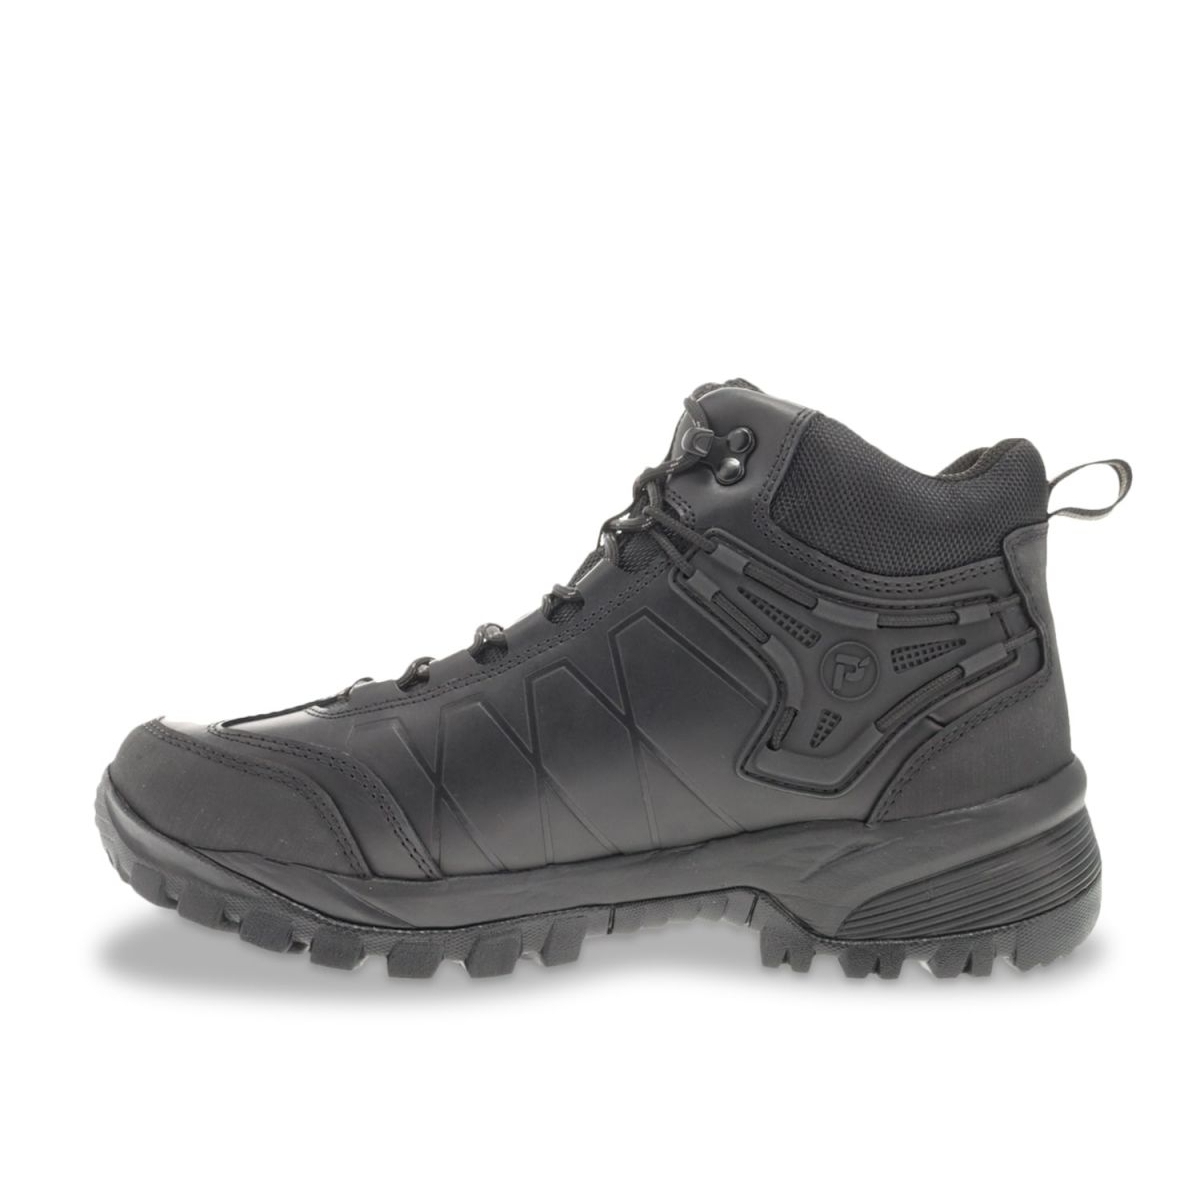 Propet Men's Ridge Walker Force Hiking Boots Black - MBA052LBLK BLACK - BLACK, 8.5 X-Wide